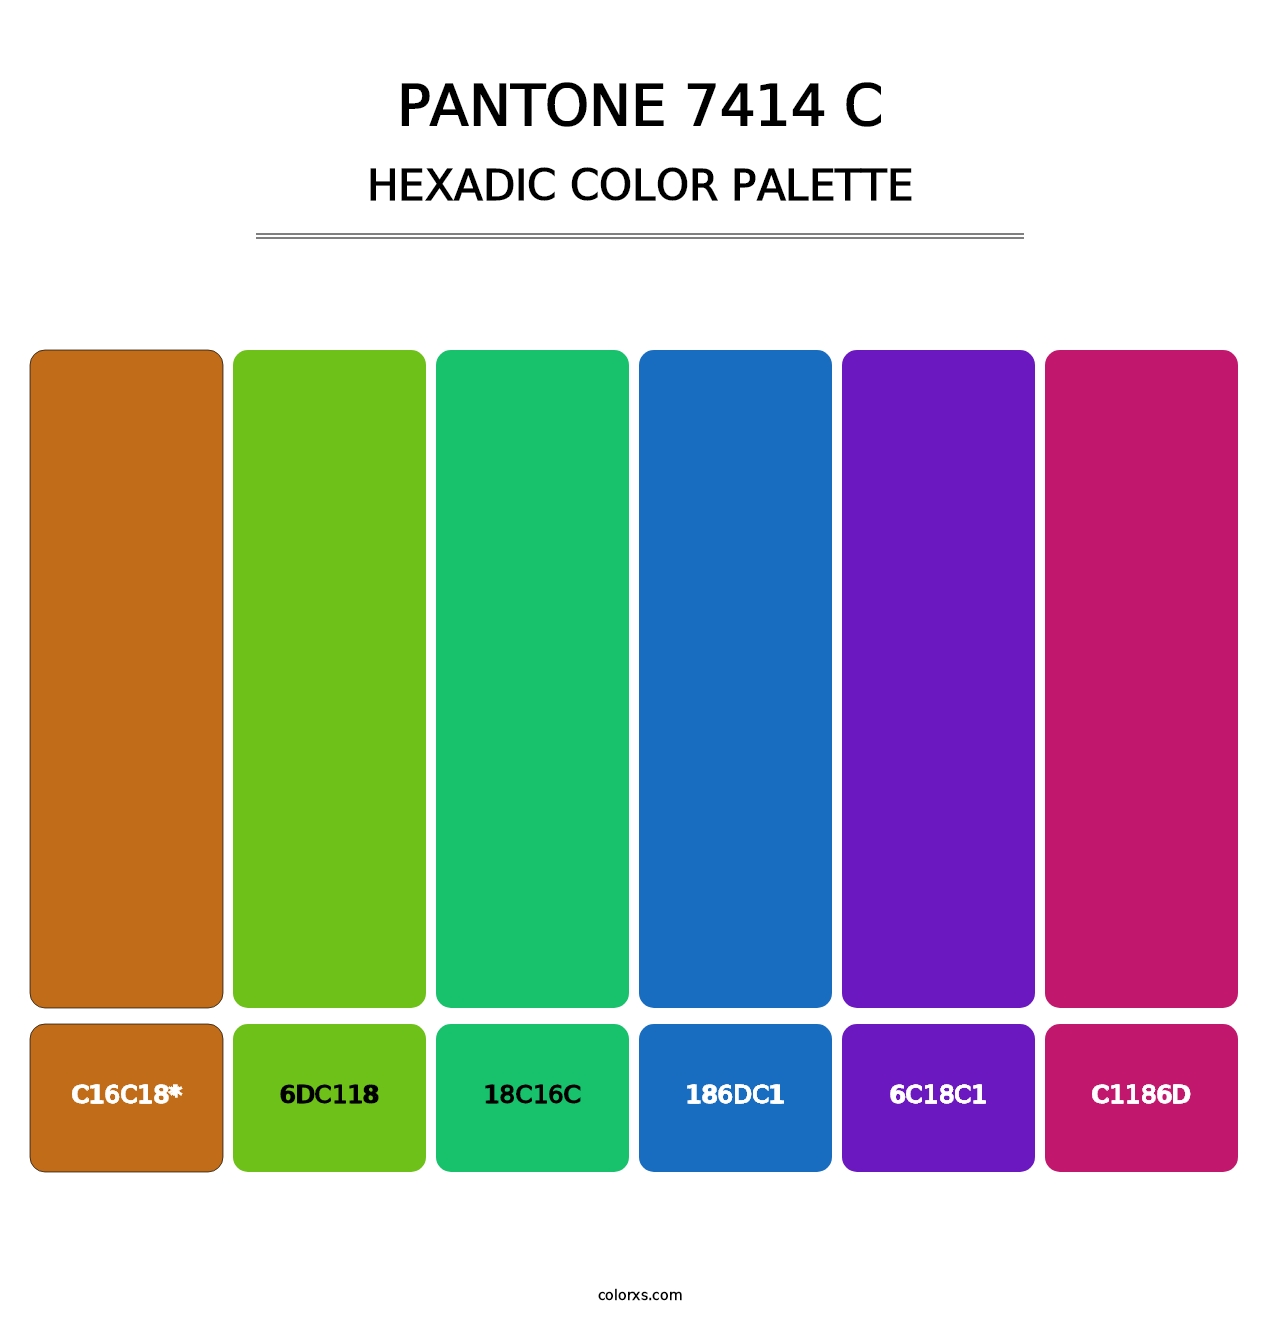 PANTONE 7414 C - Hexadic Color Palette